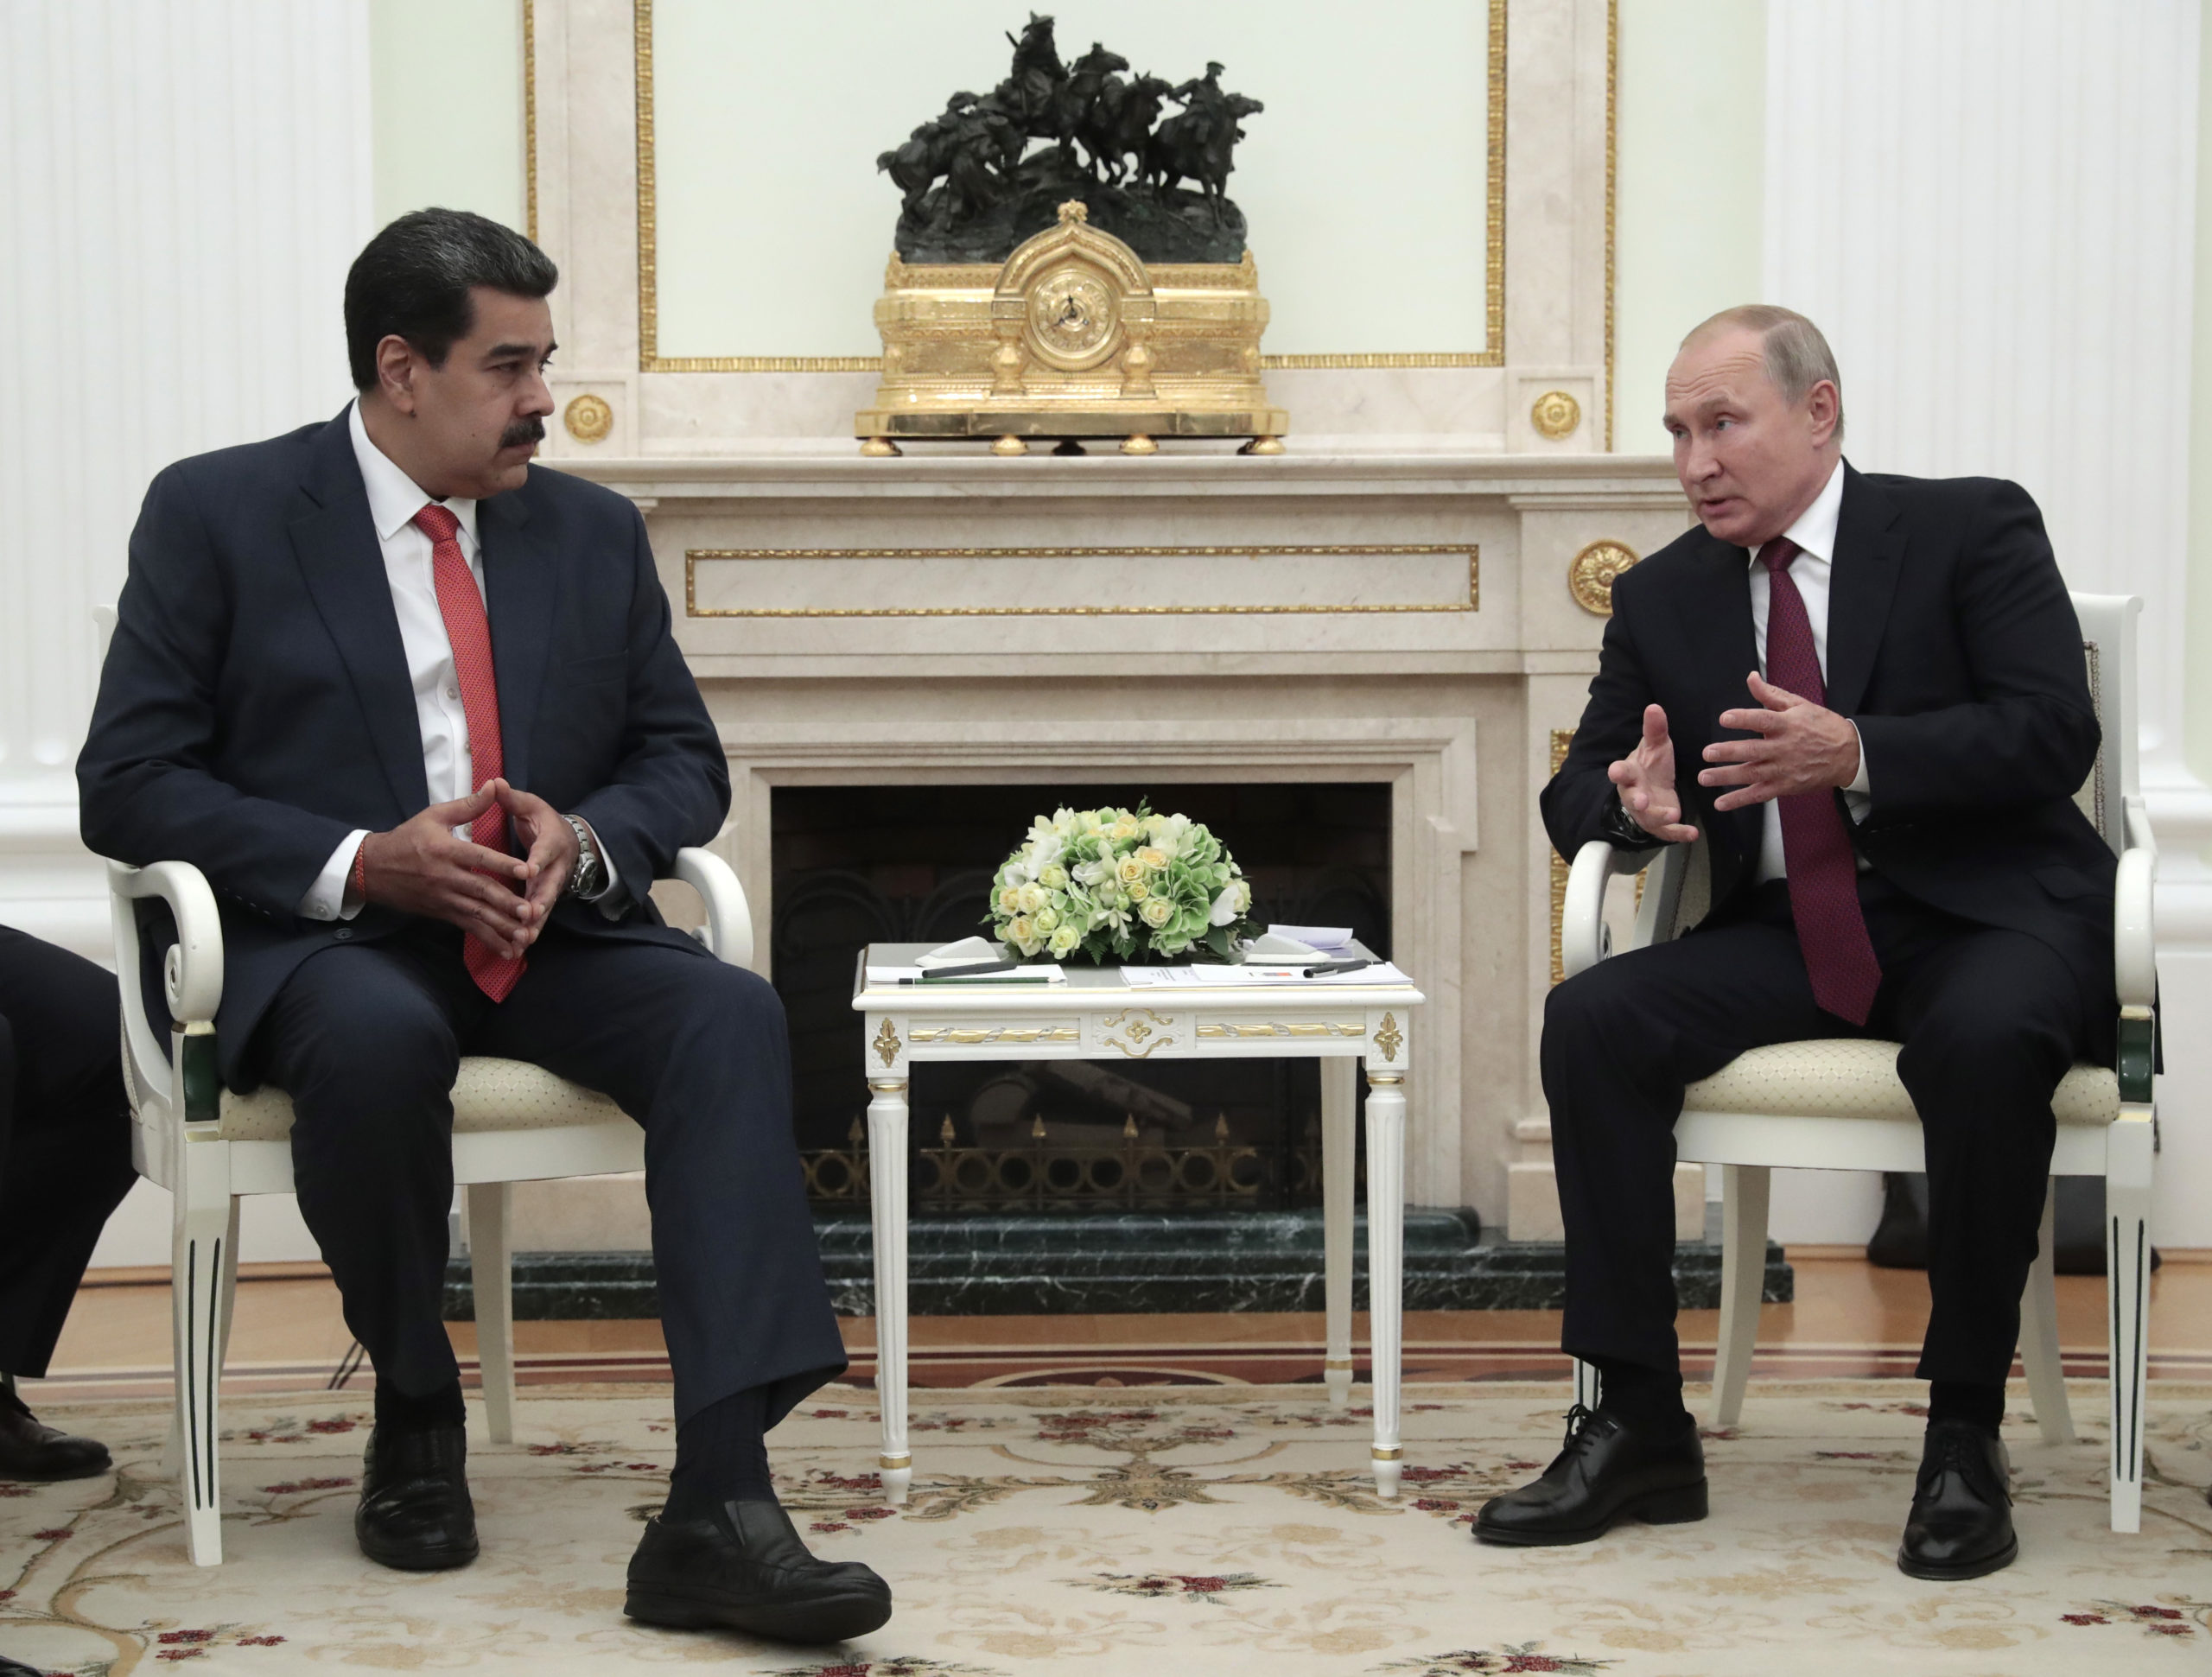 Russian President Vladimir Putin meets with Venezuelan President Nicolás Maduro in Moscow on Sept. 25, 2019. (Sergei Chirikov/AFP via Getty Images)